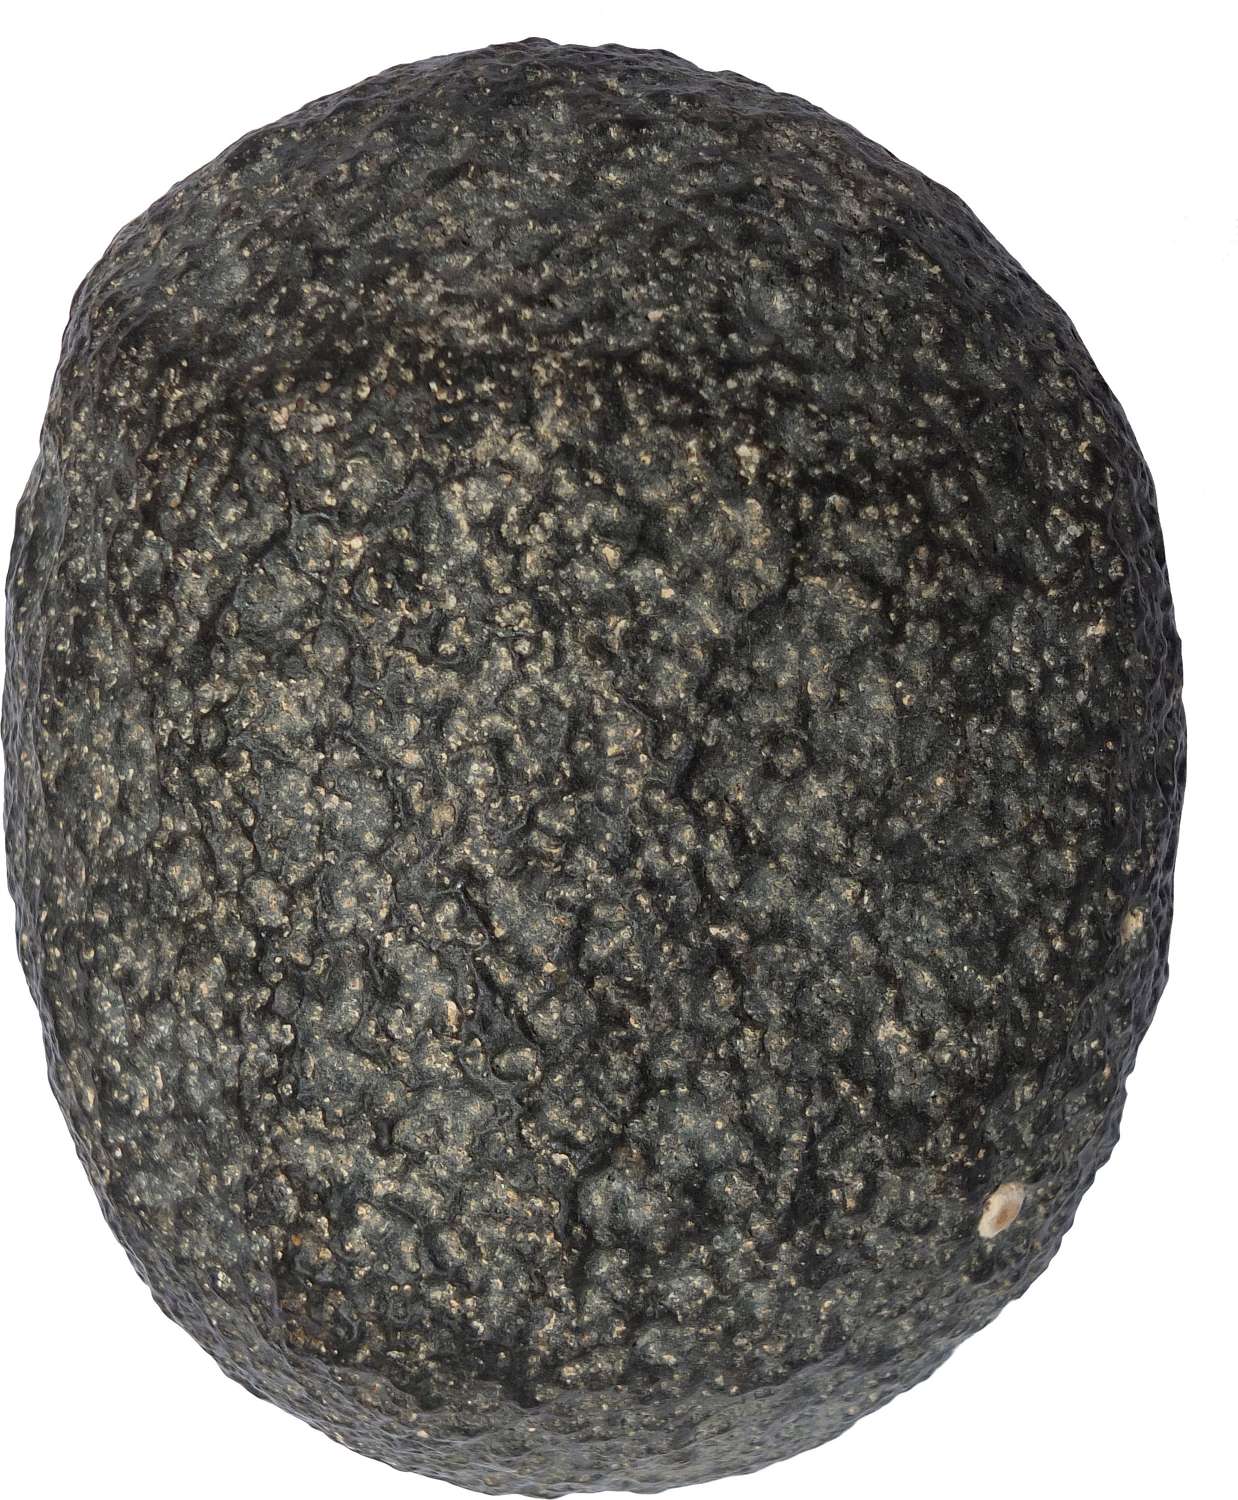 A North African Neolithic dolerite quern handstone, c. 6500-4000 B.C.